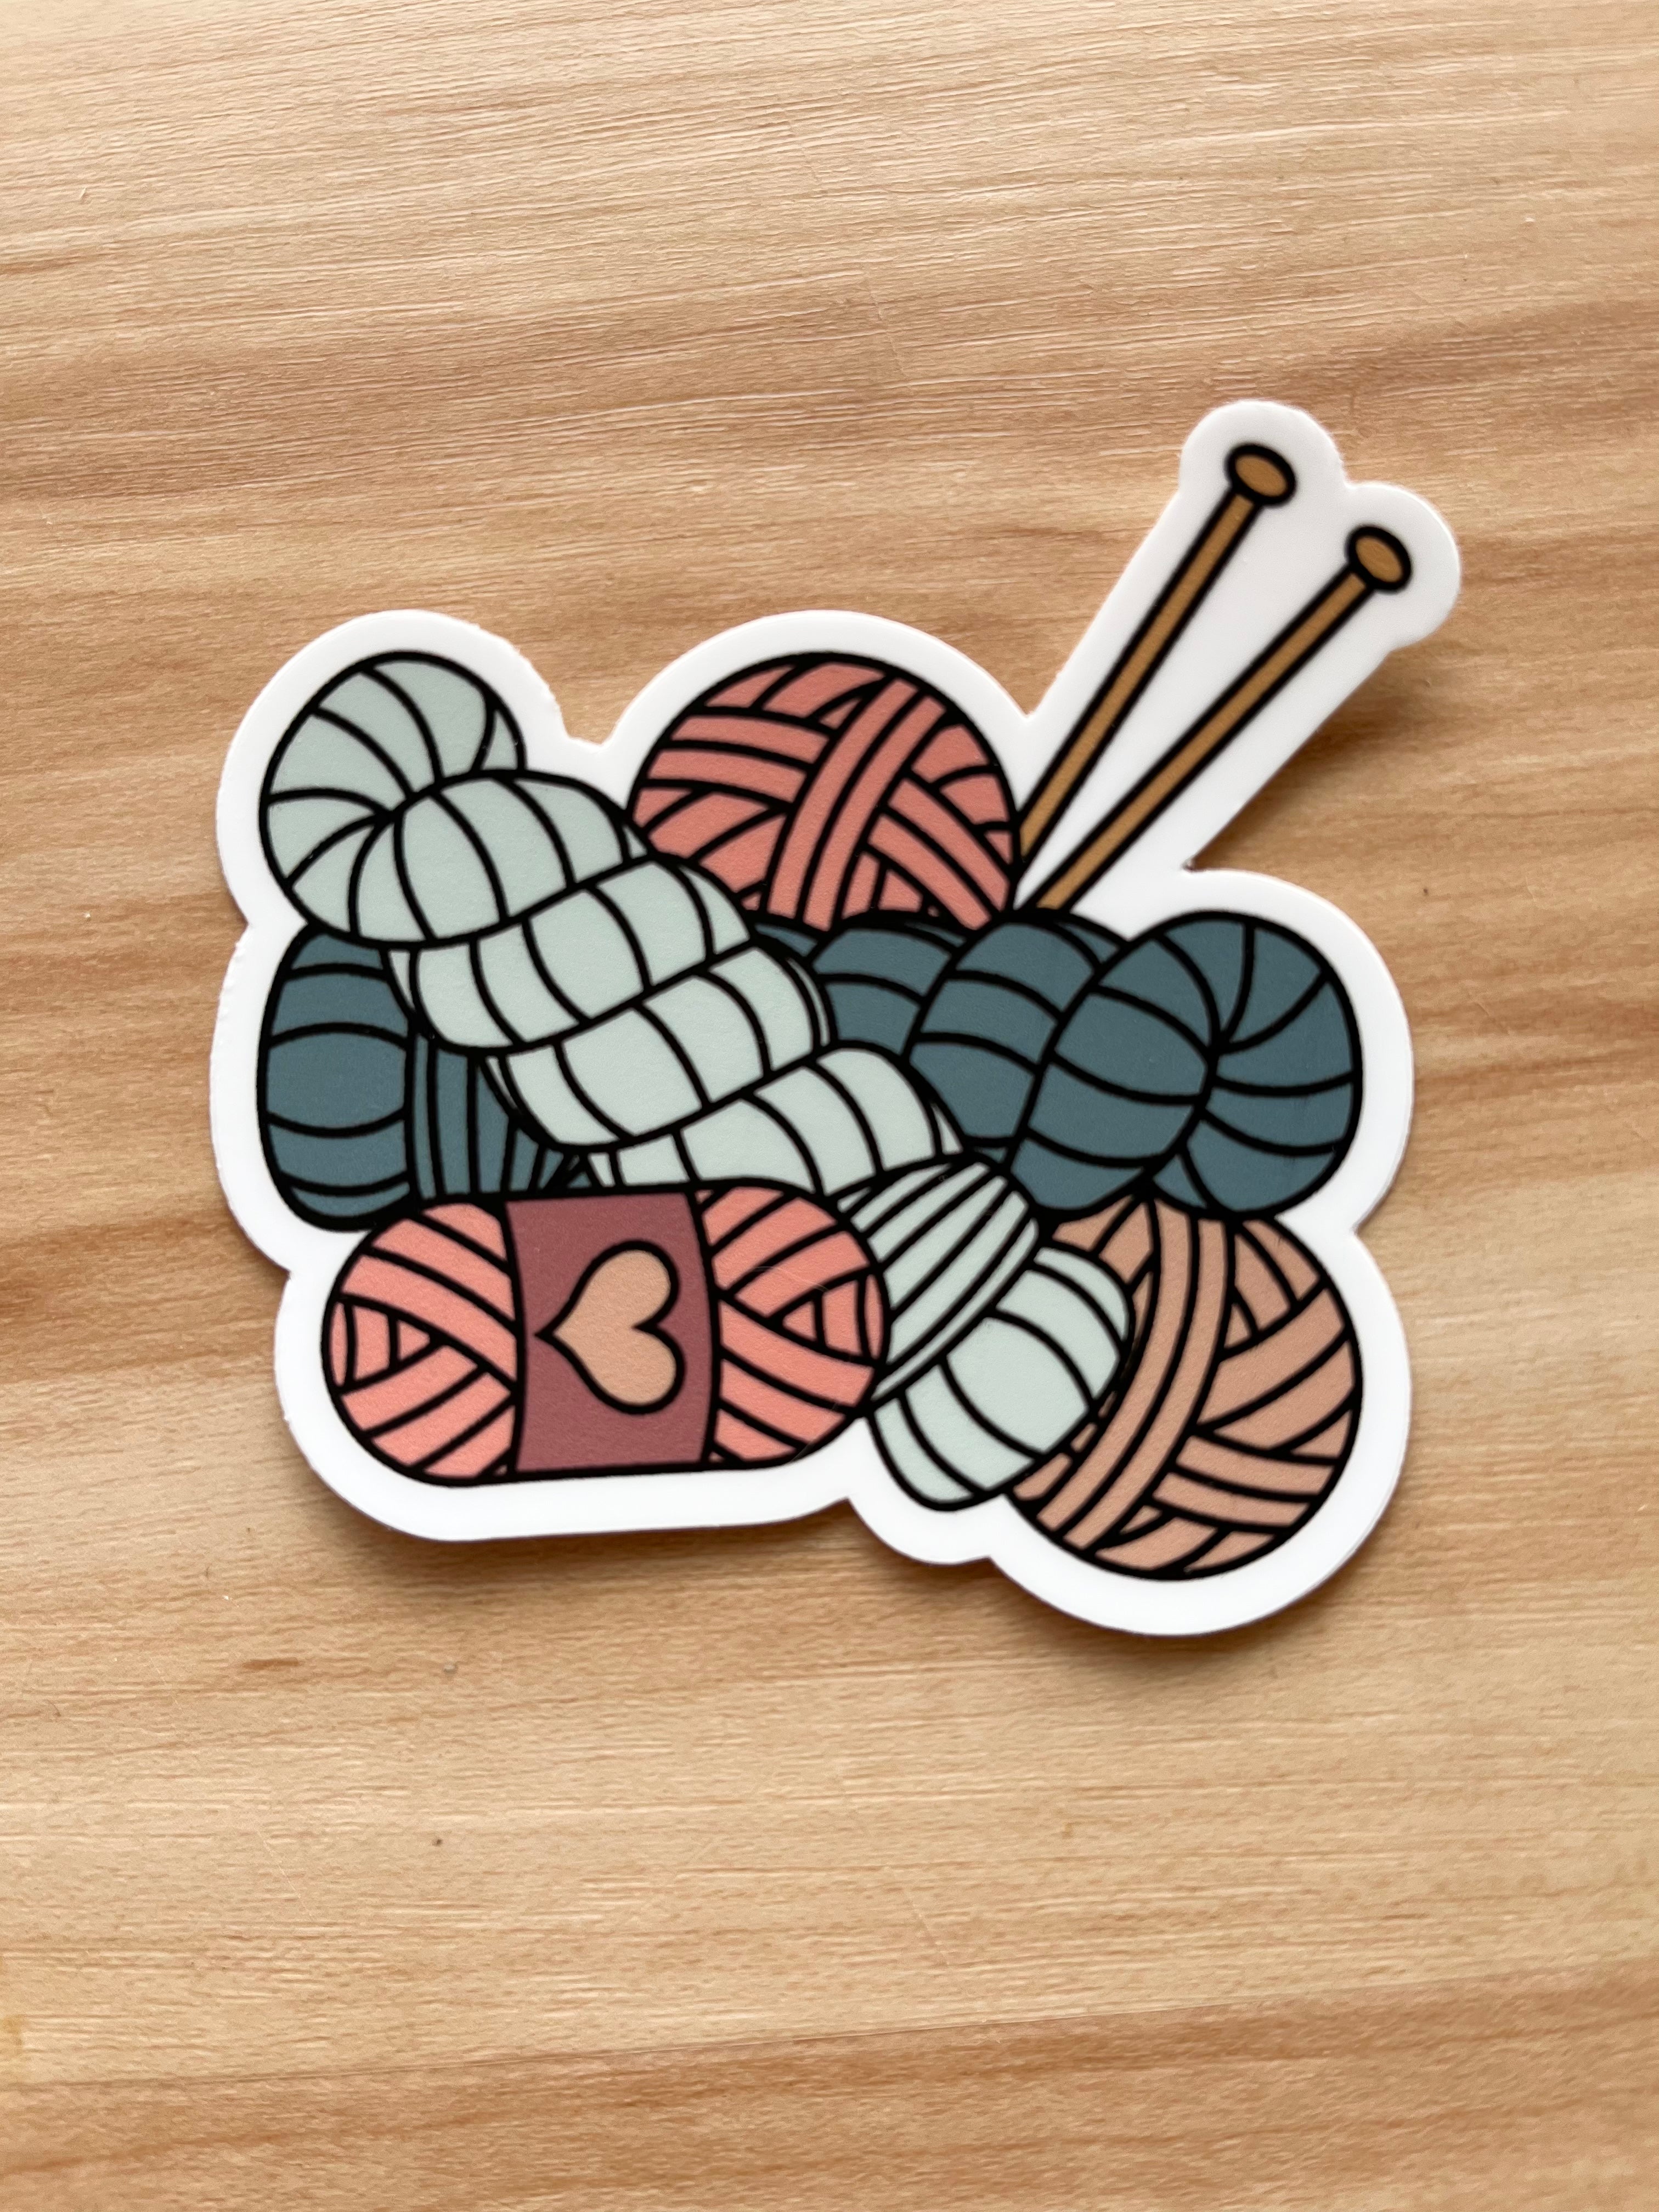 Yarn Love - Knitting Themed Stickers